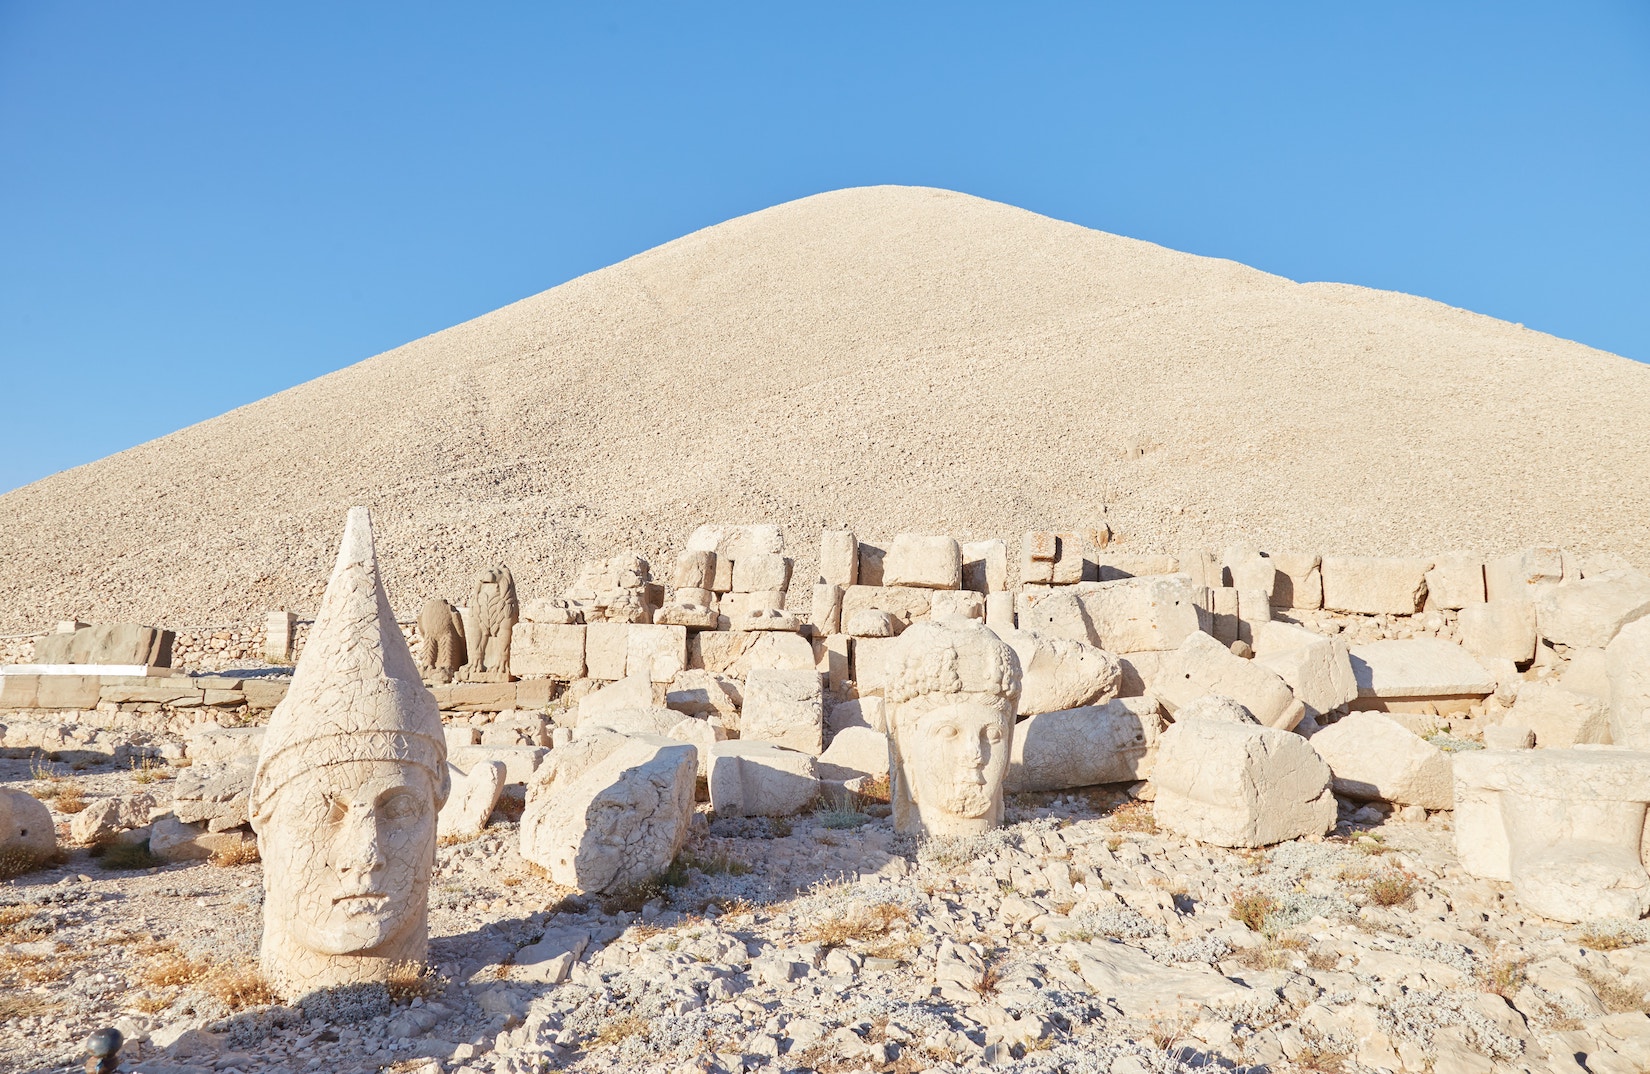 Mt. Nemrut Top Archaeological Sites in Turkey